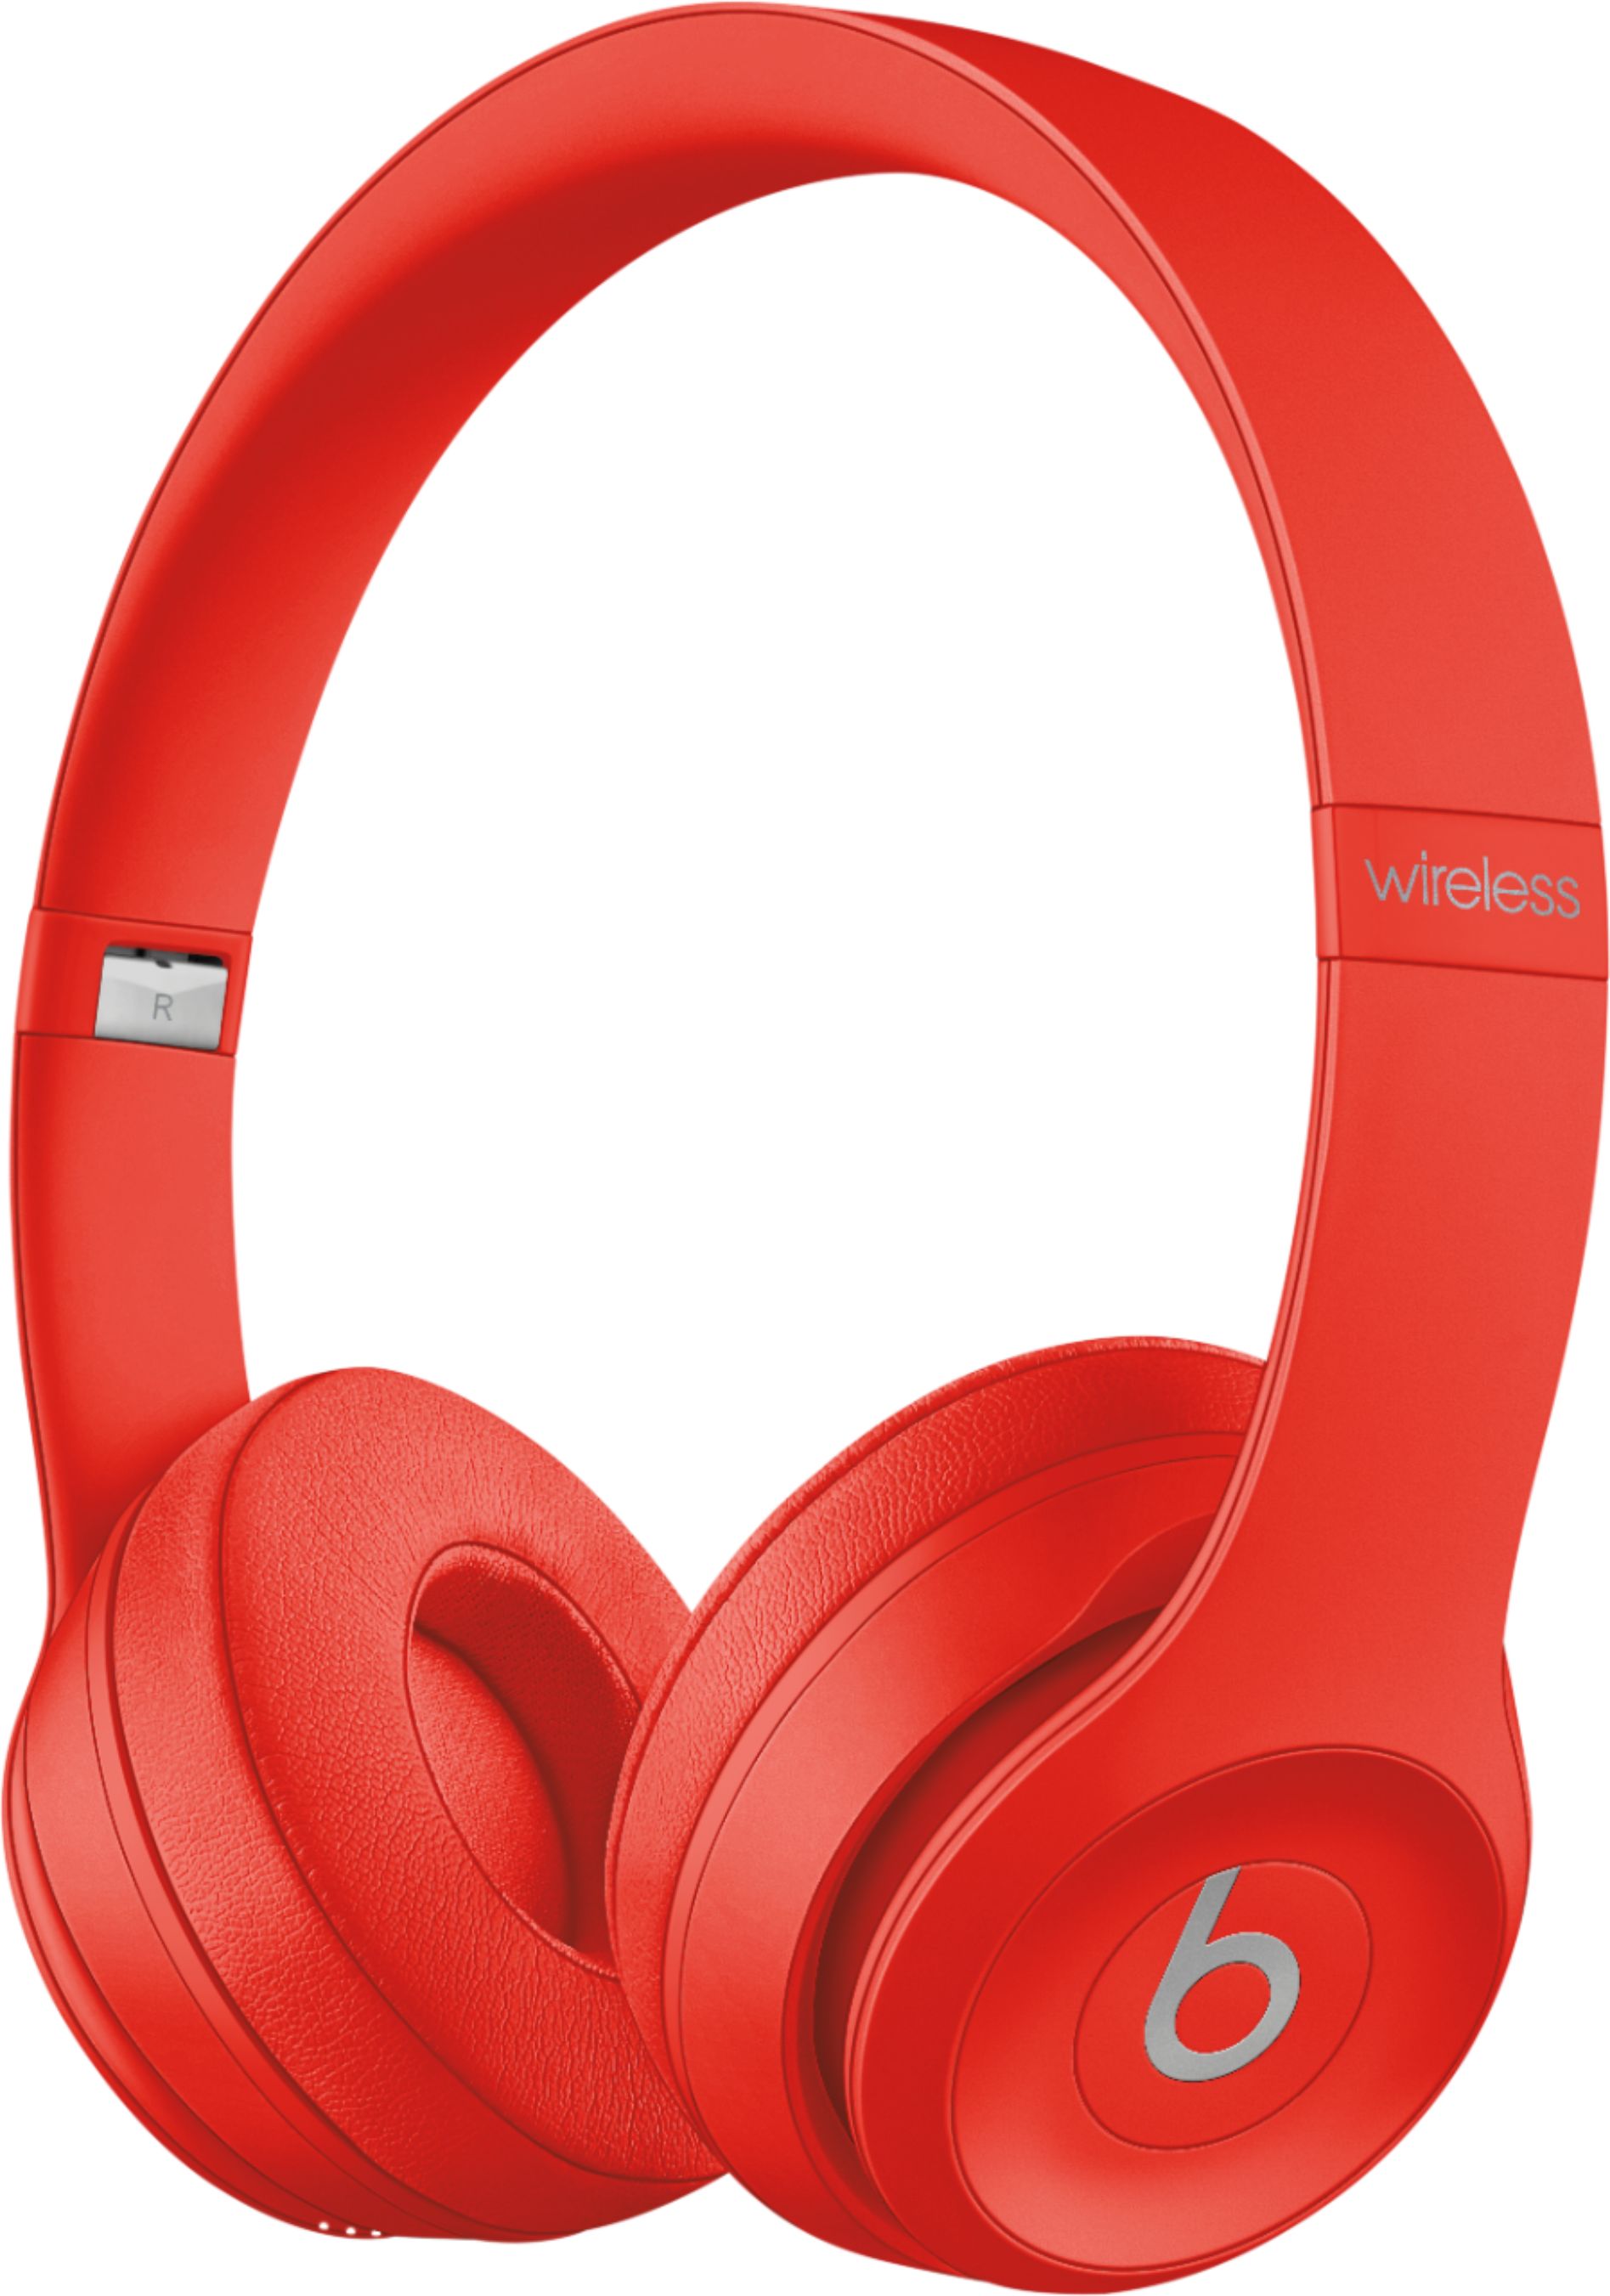 eksekverbar Pædagogik Langt væk Beats by Dr. Dre Solo³ Wireless On-Ear Headphones (PRODUCT)RED Citrus Red  MX472LL/A - Best Buy